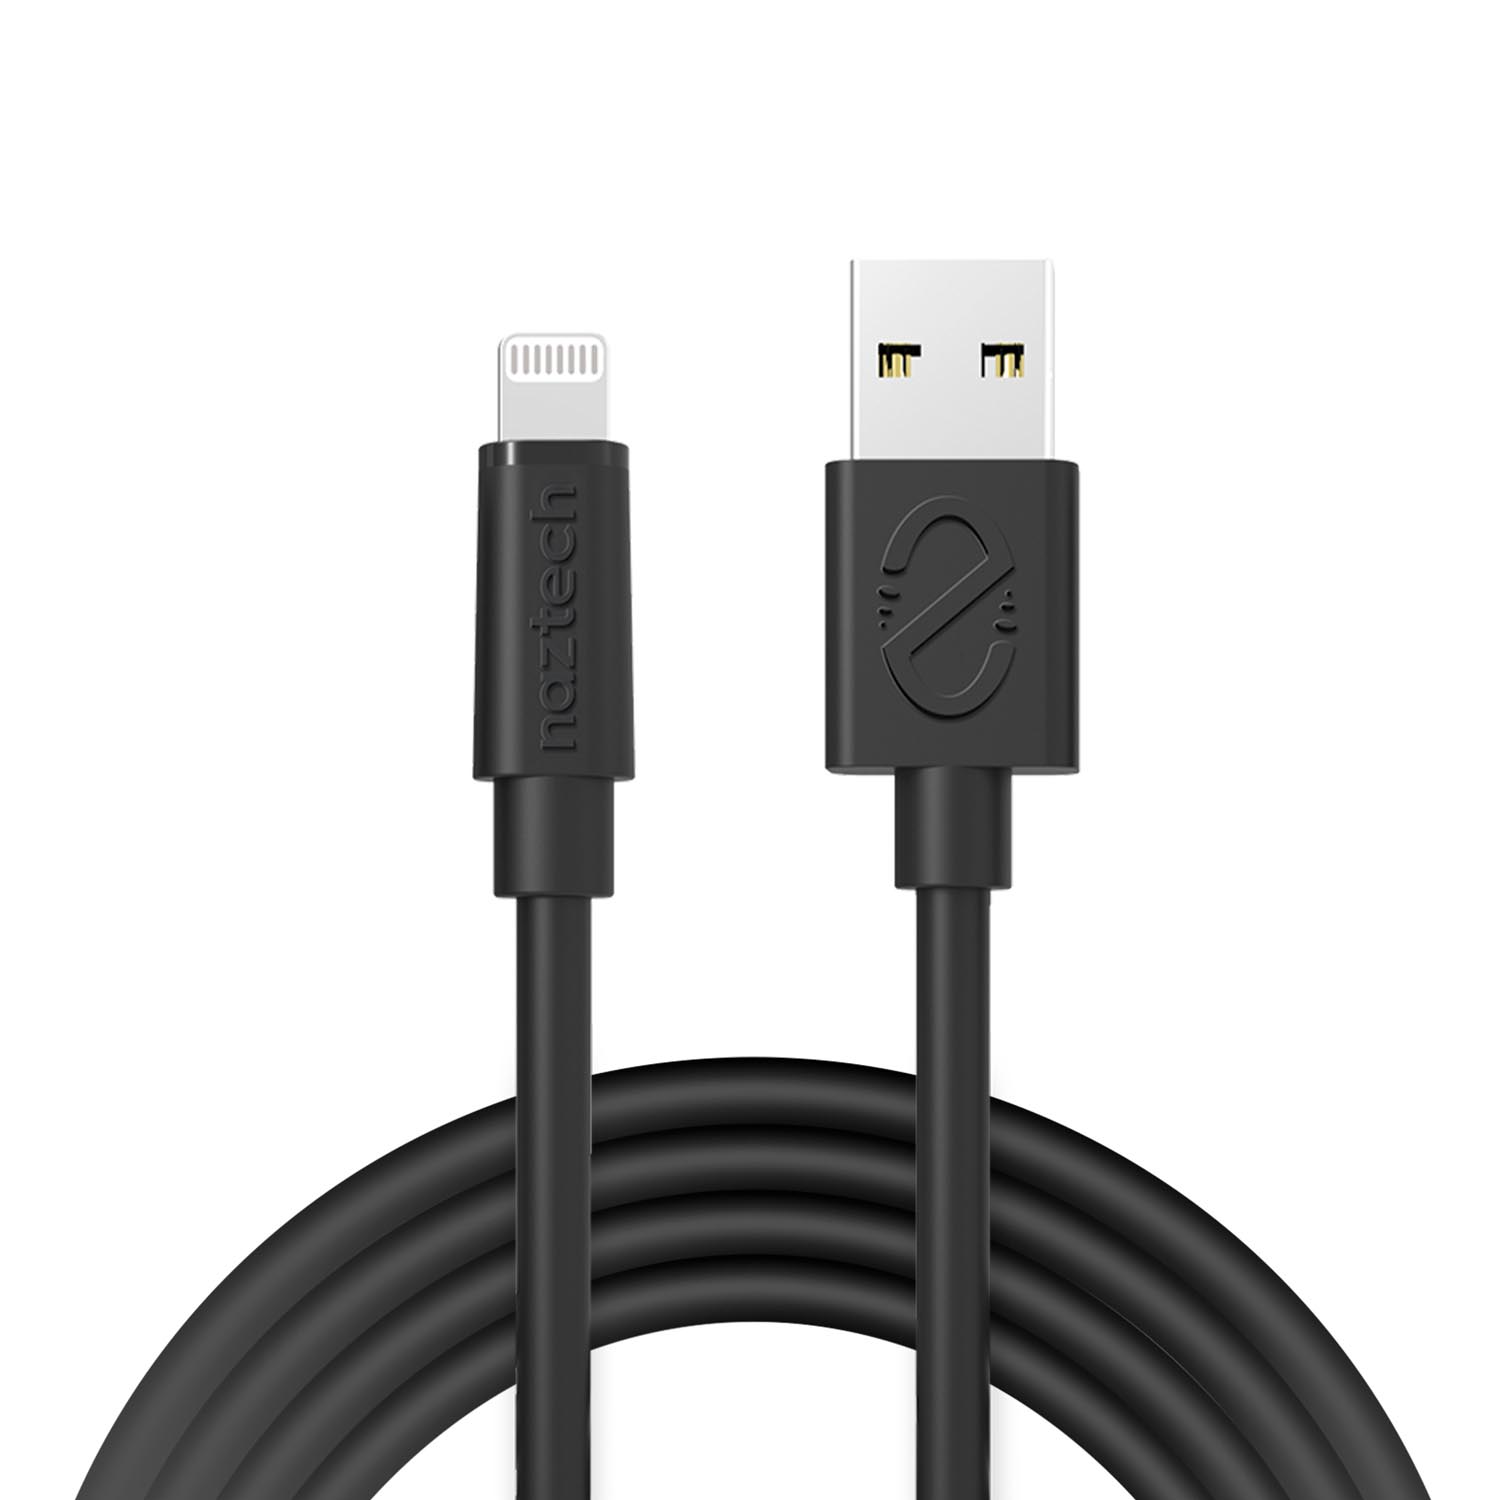 Naztech USB To MFi Lightning Cable 12ft